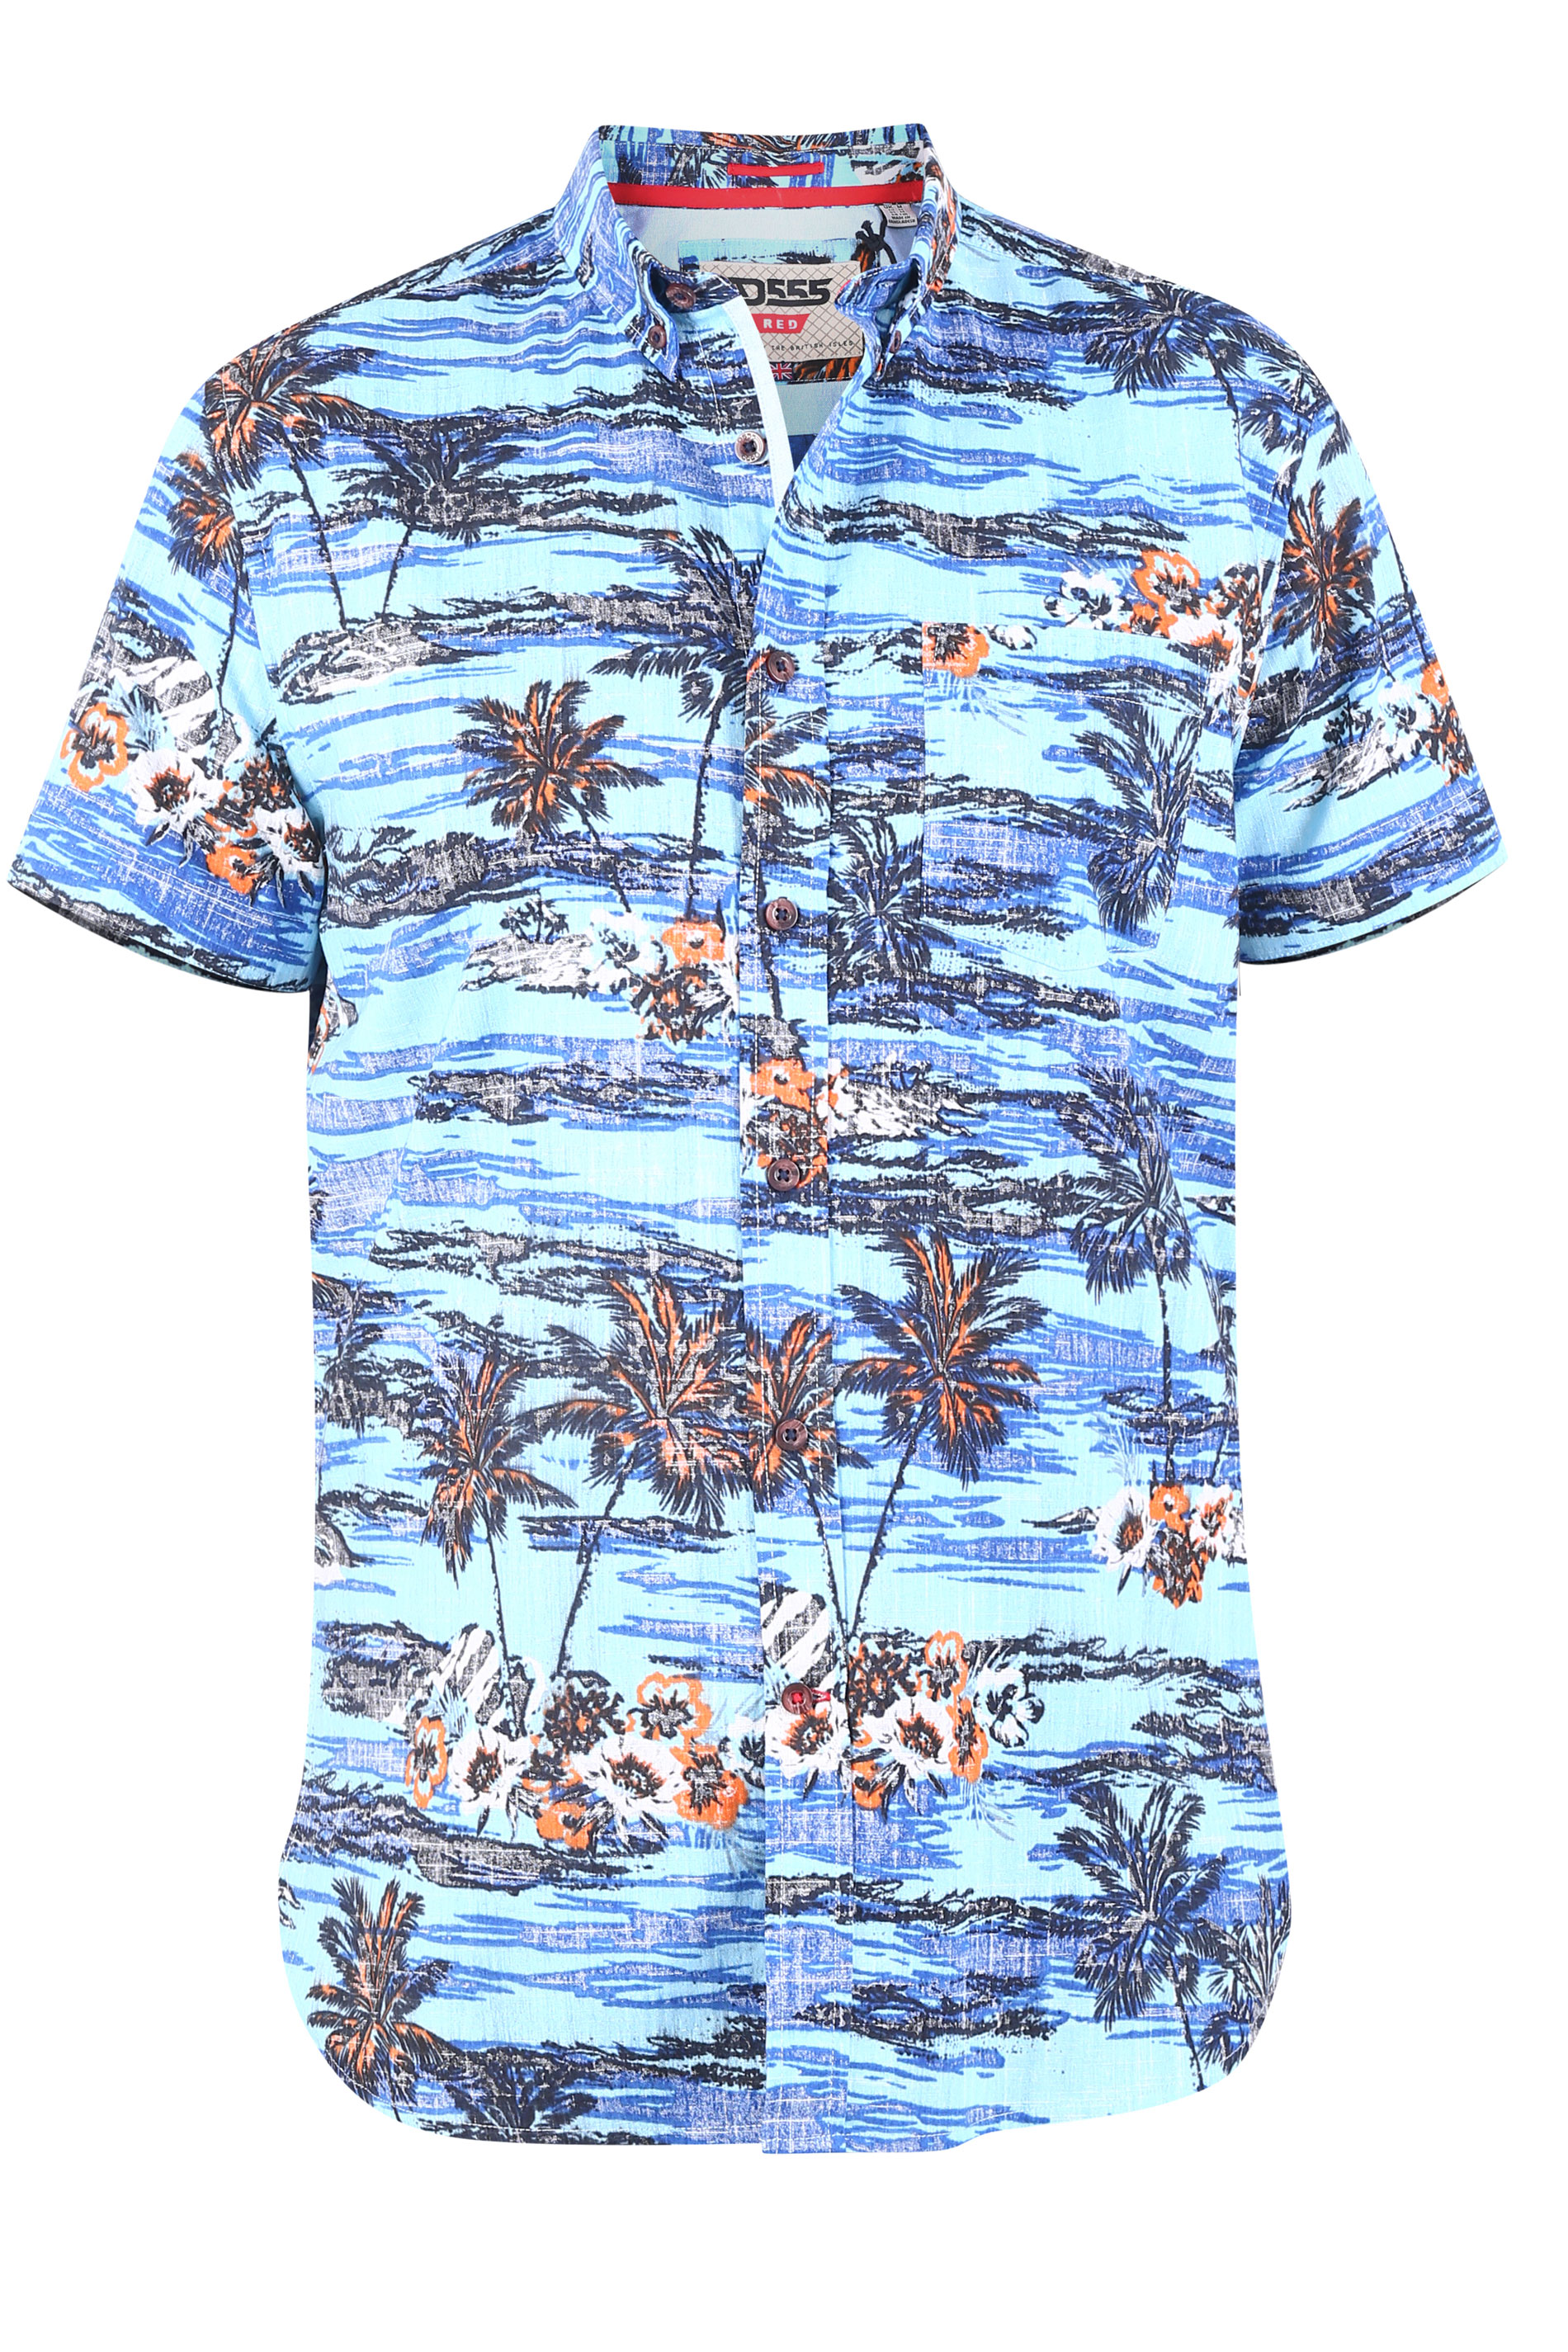 D555 Big & Tall Light Blue Hawaiian Print Shirt 1